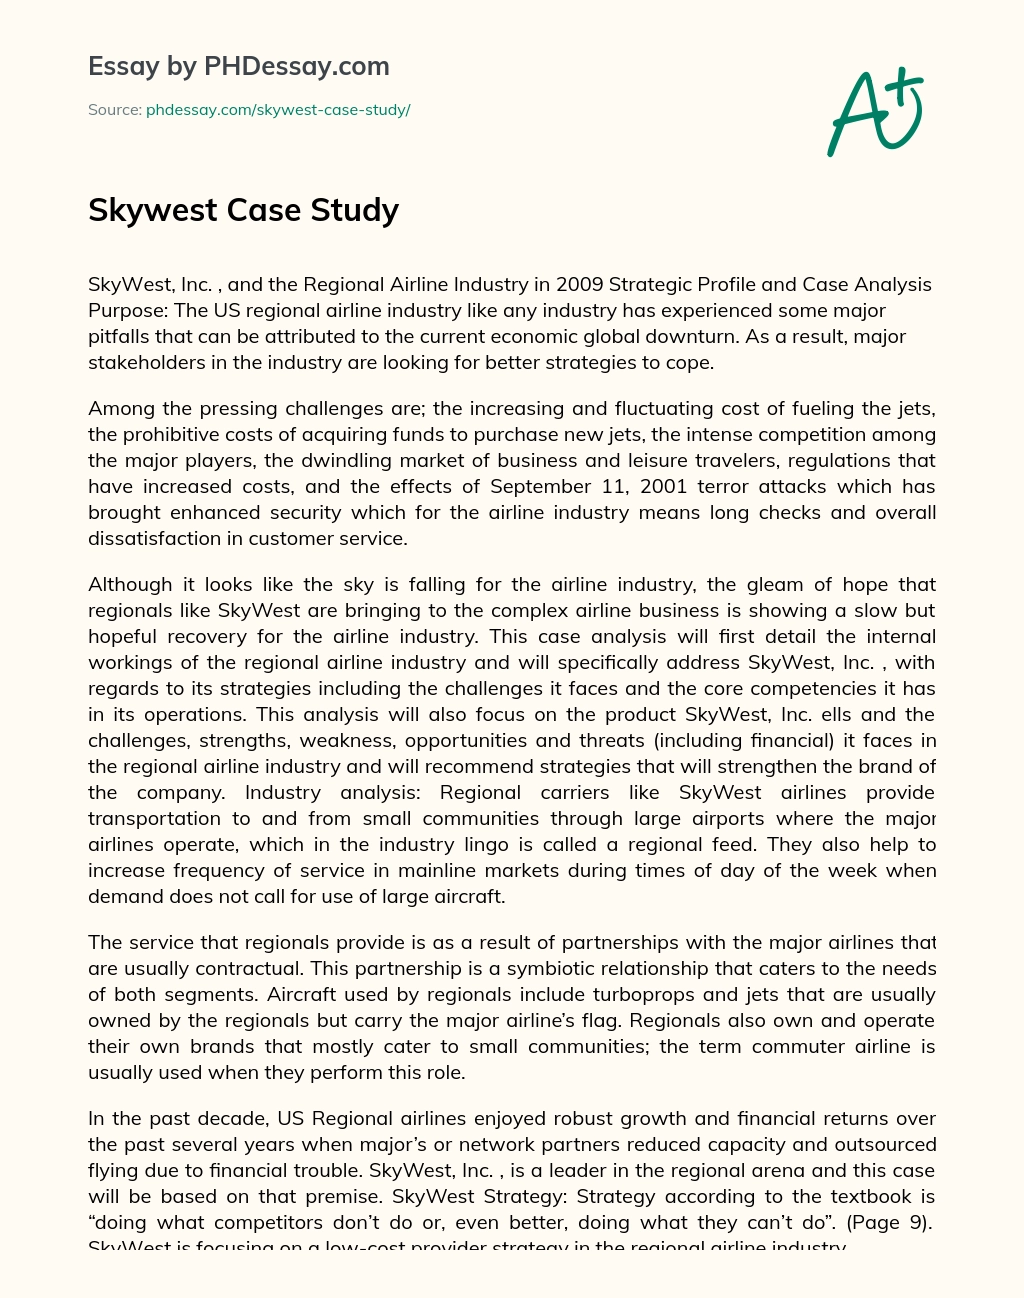 Skywest Case Study essay